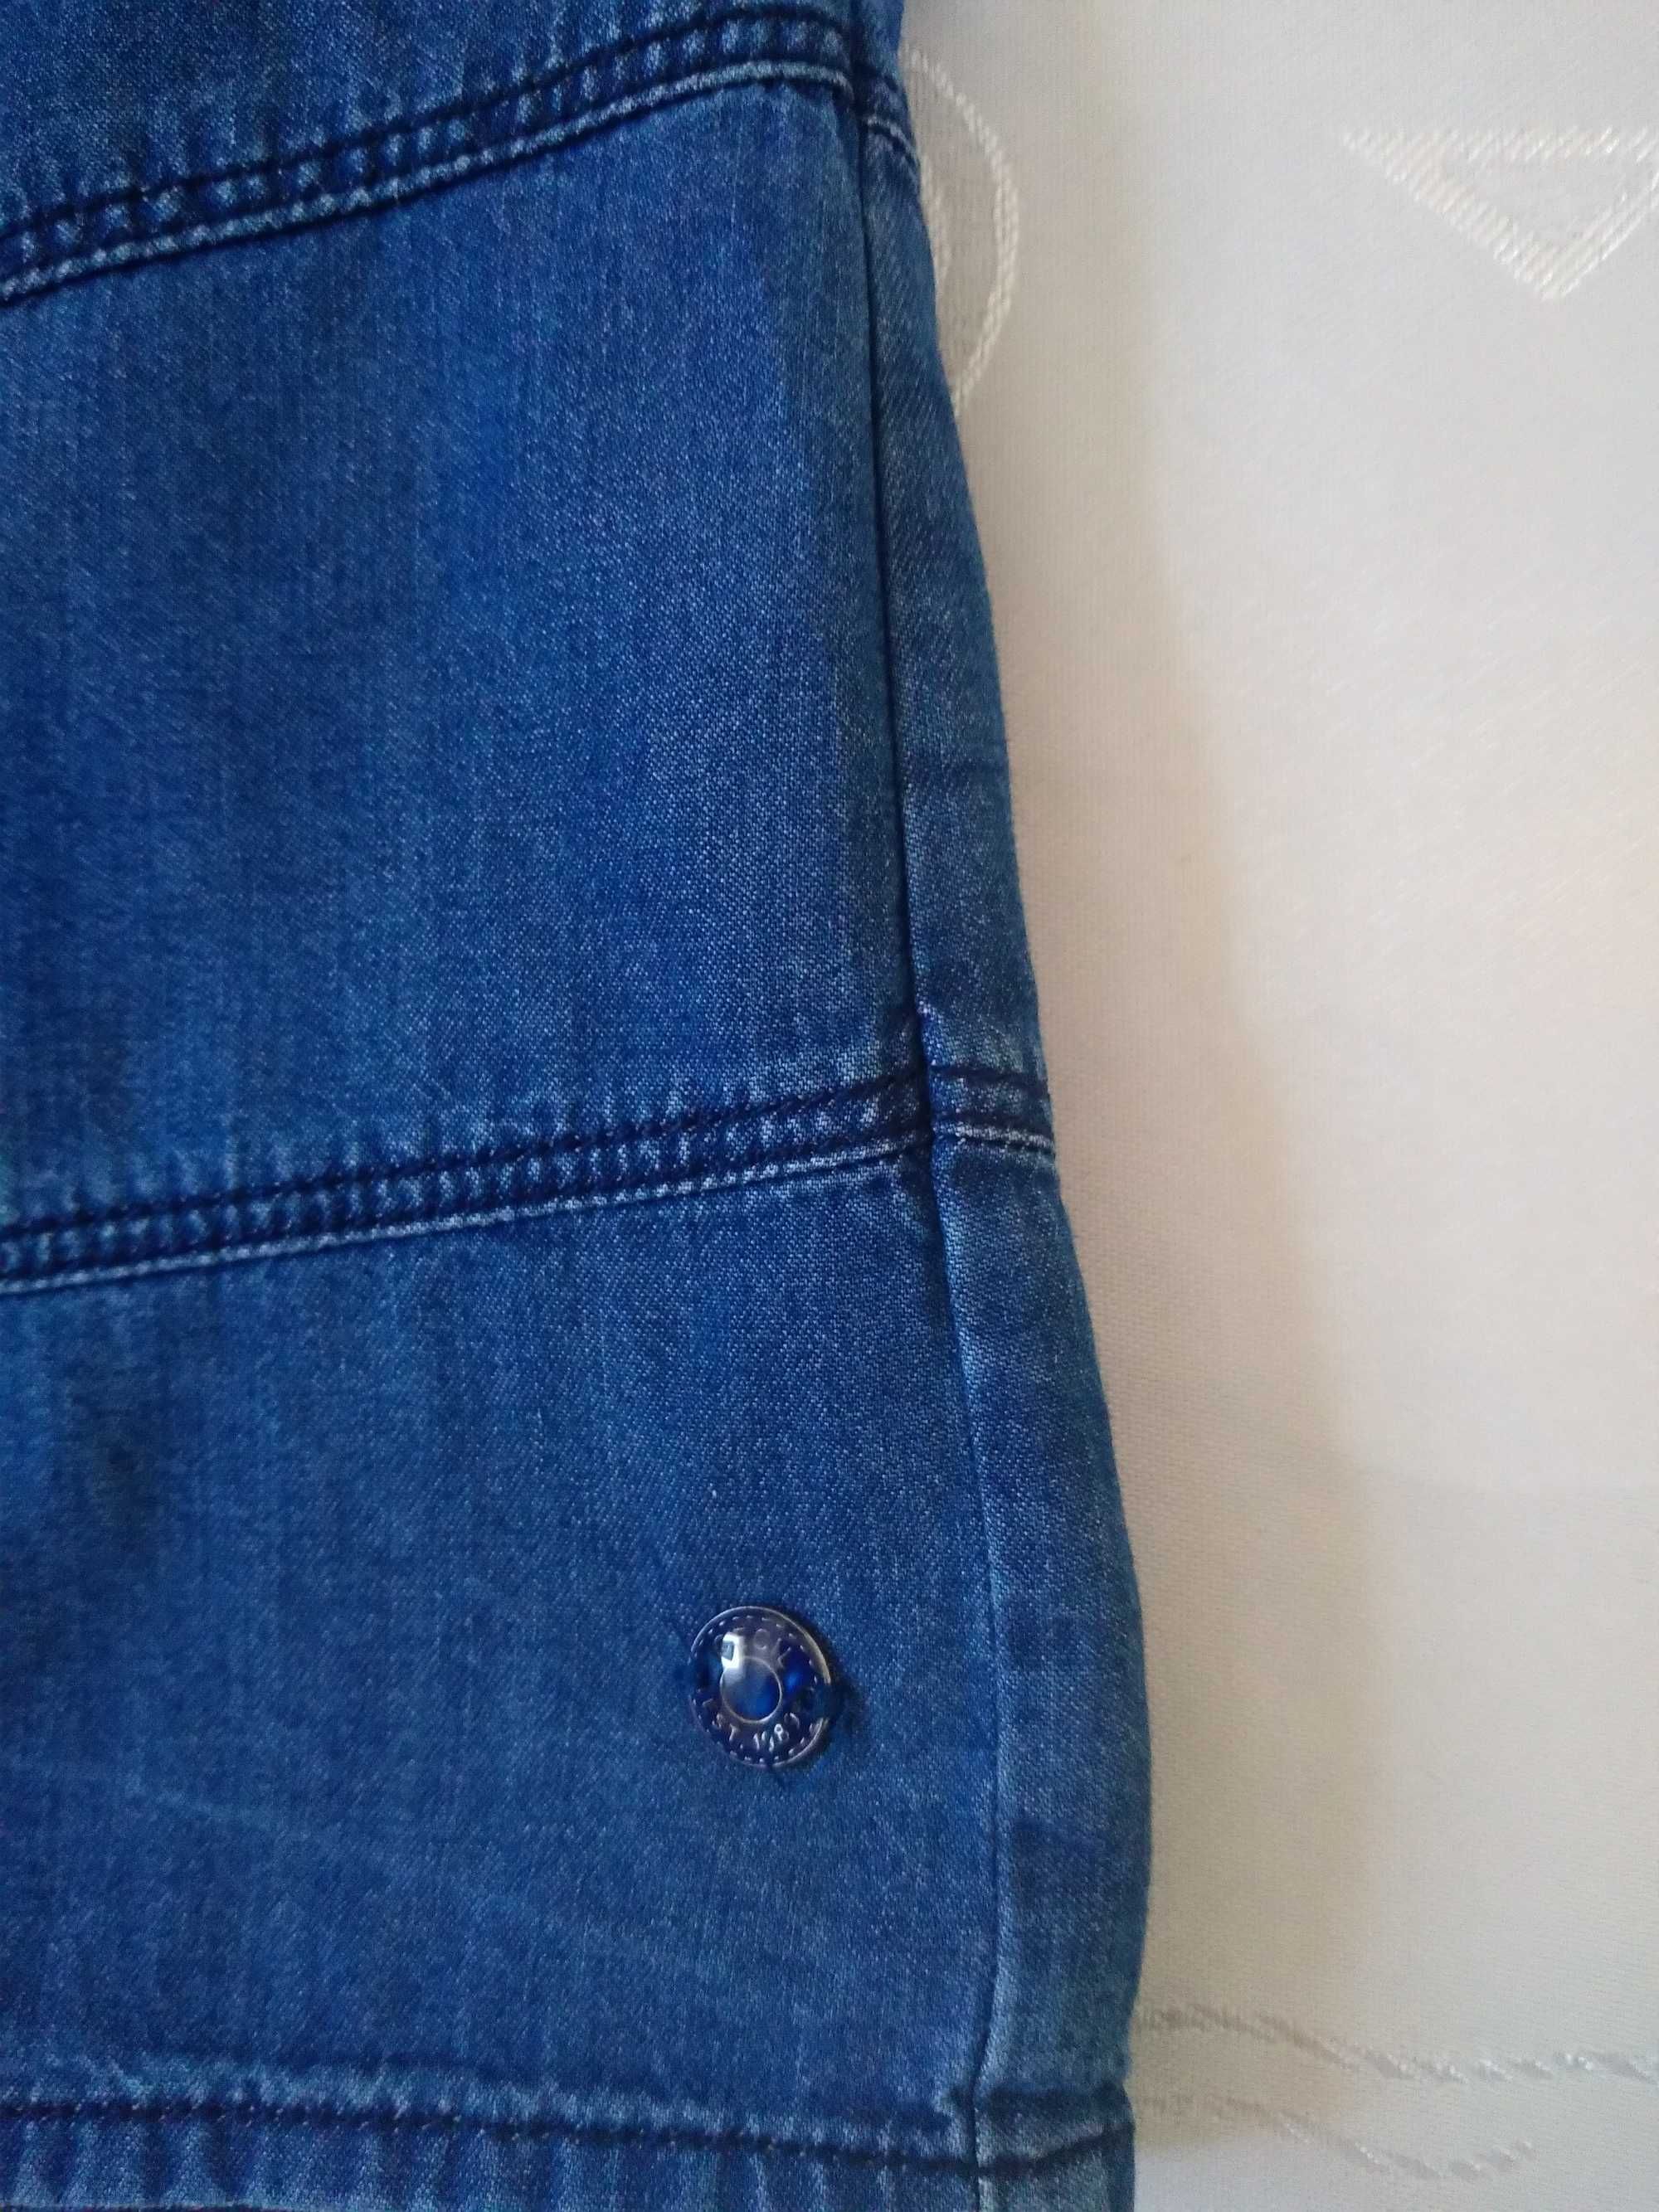 CECIL , sukienka jeansowa  , XXL , bawełniana, niebieska